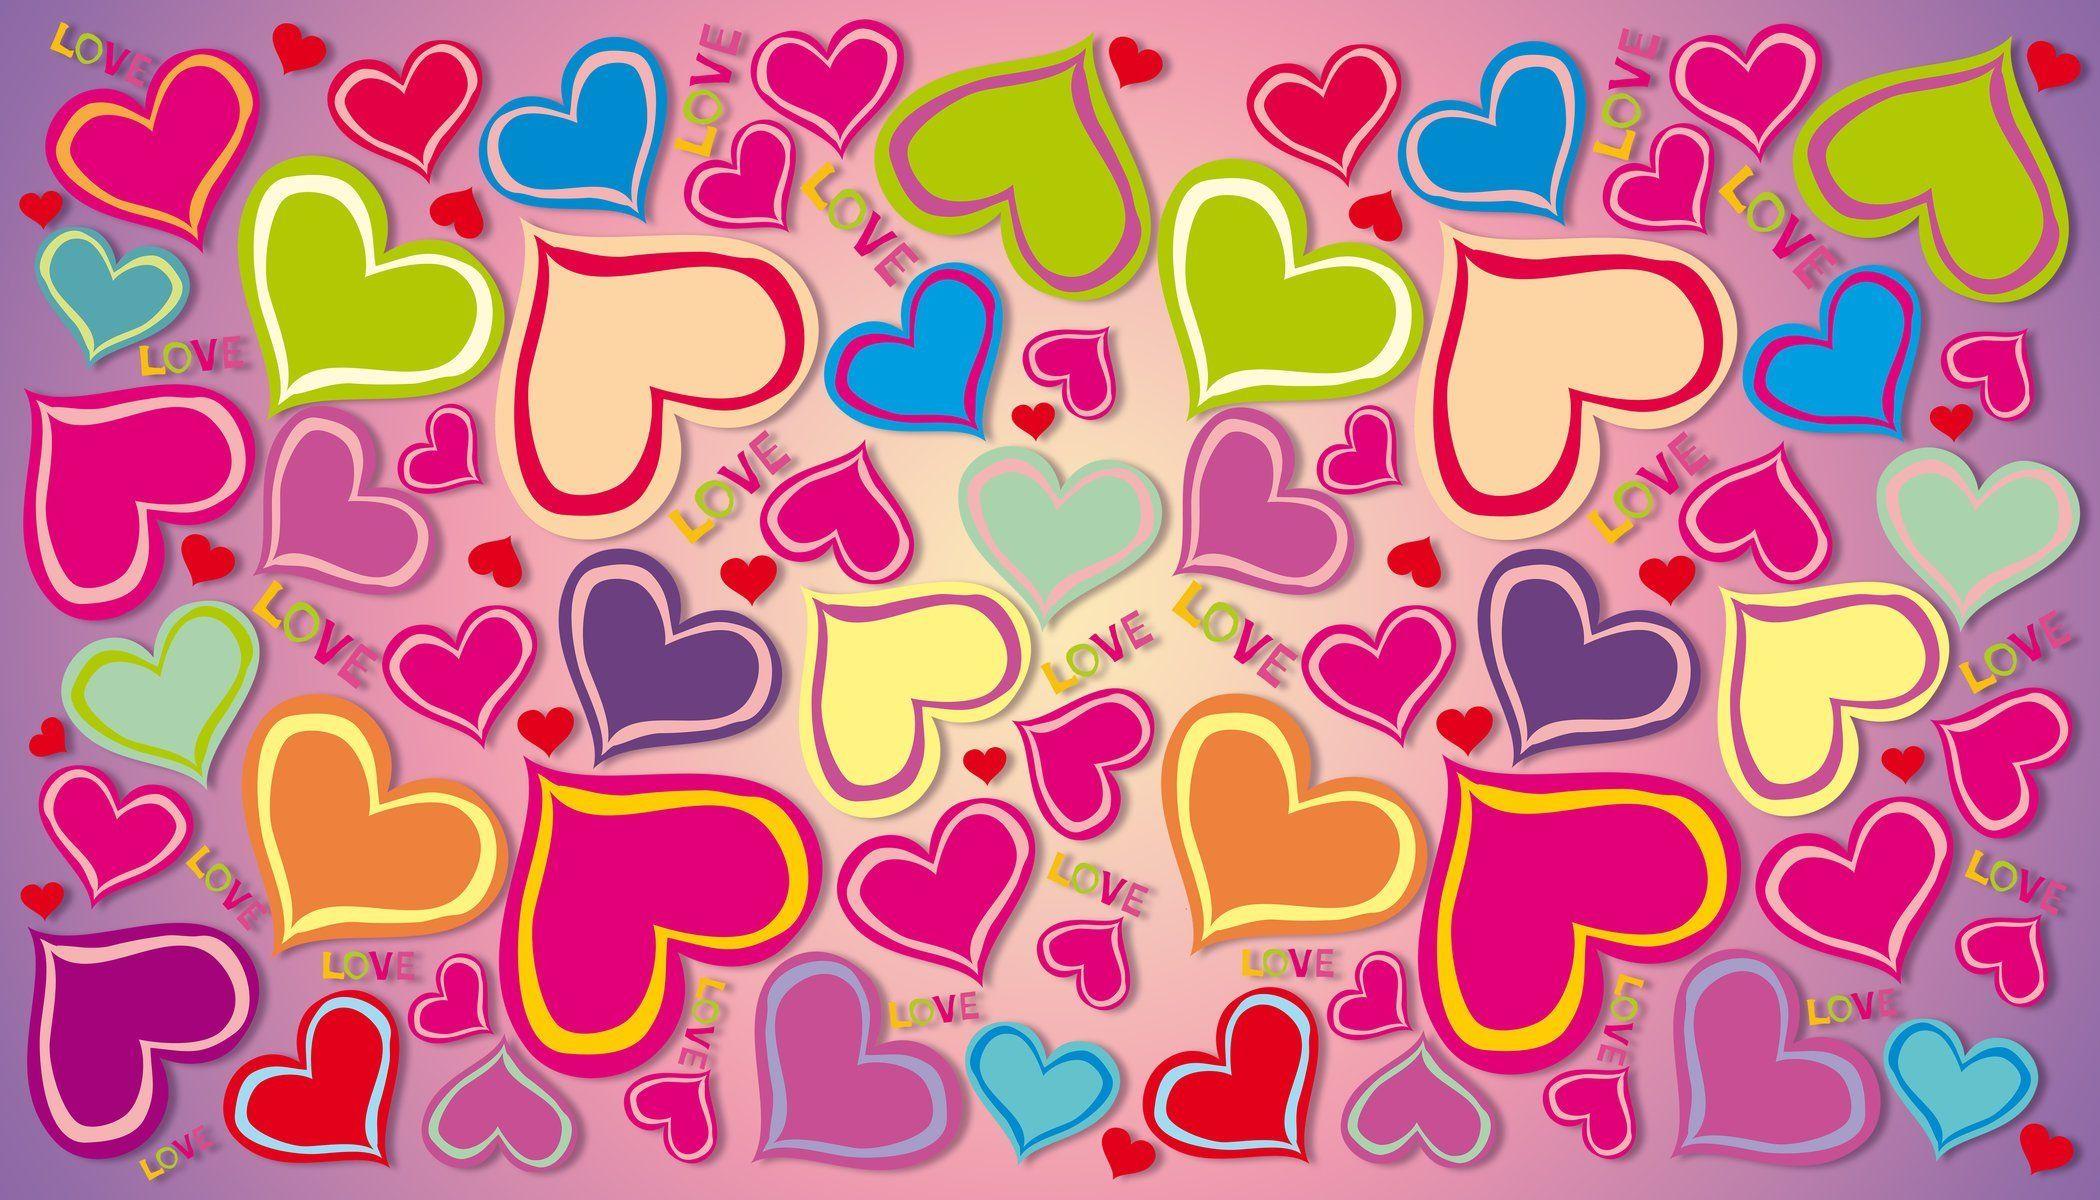 Rainbow Heart Wallpaper. (44++ Wallpaper)